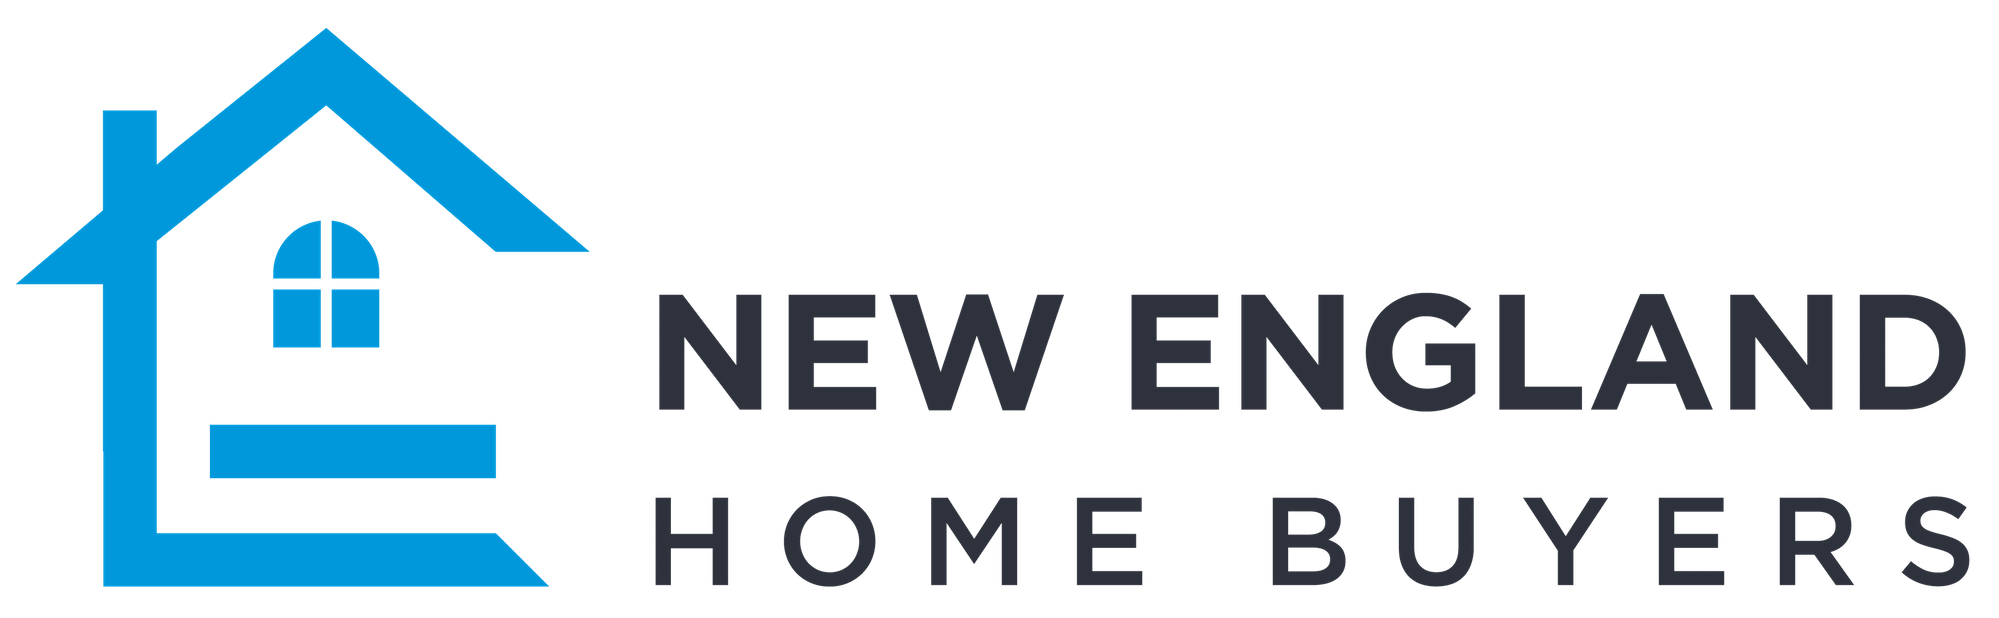 New England Home Buyers, LLC Logo